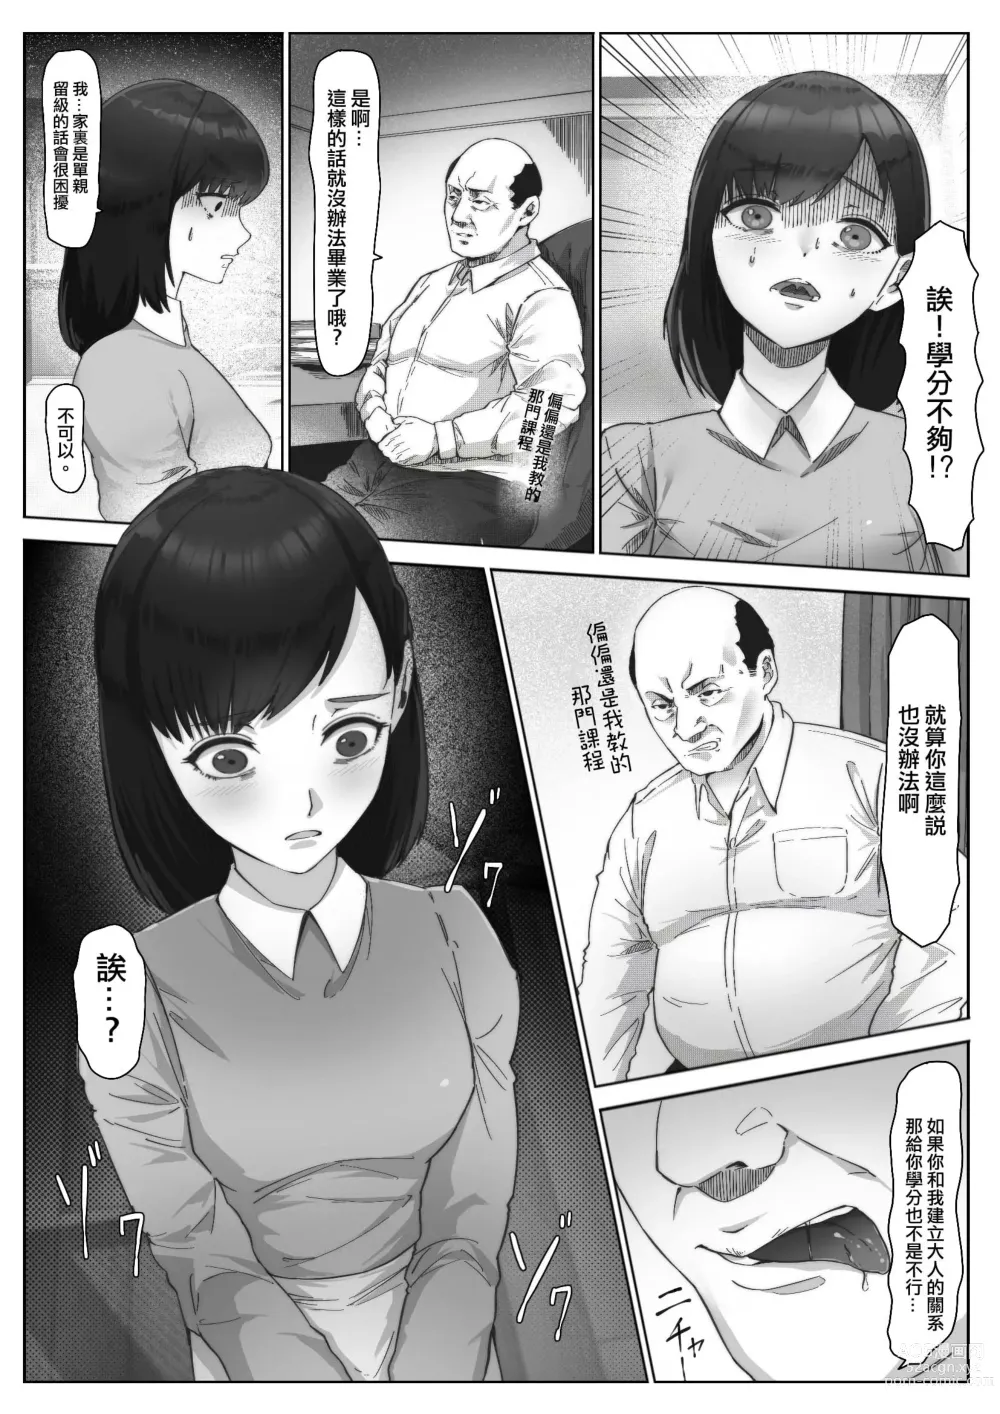 Page 5 of doujinshi 因為想要學分所以和老師上床了這件事